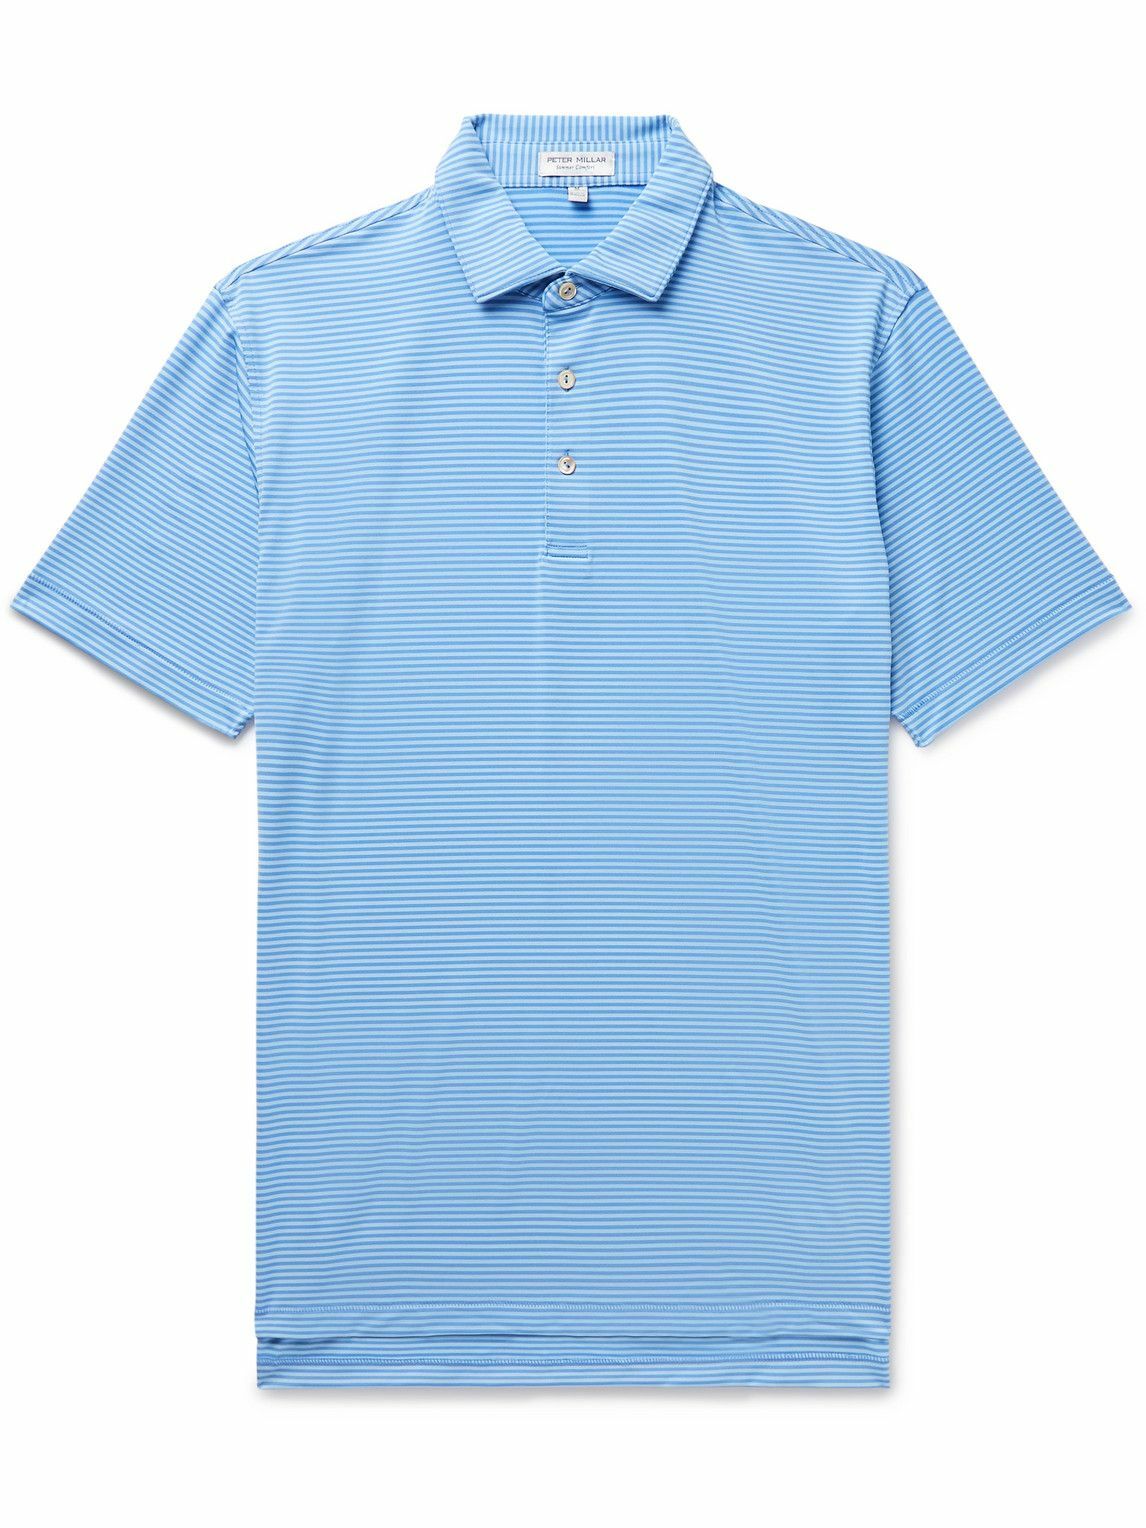 Peter Millar - Hales Performance Striped Tech-Jersey Golf Polo Shirt ...